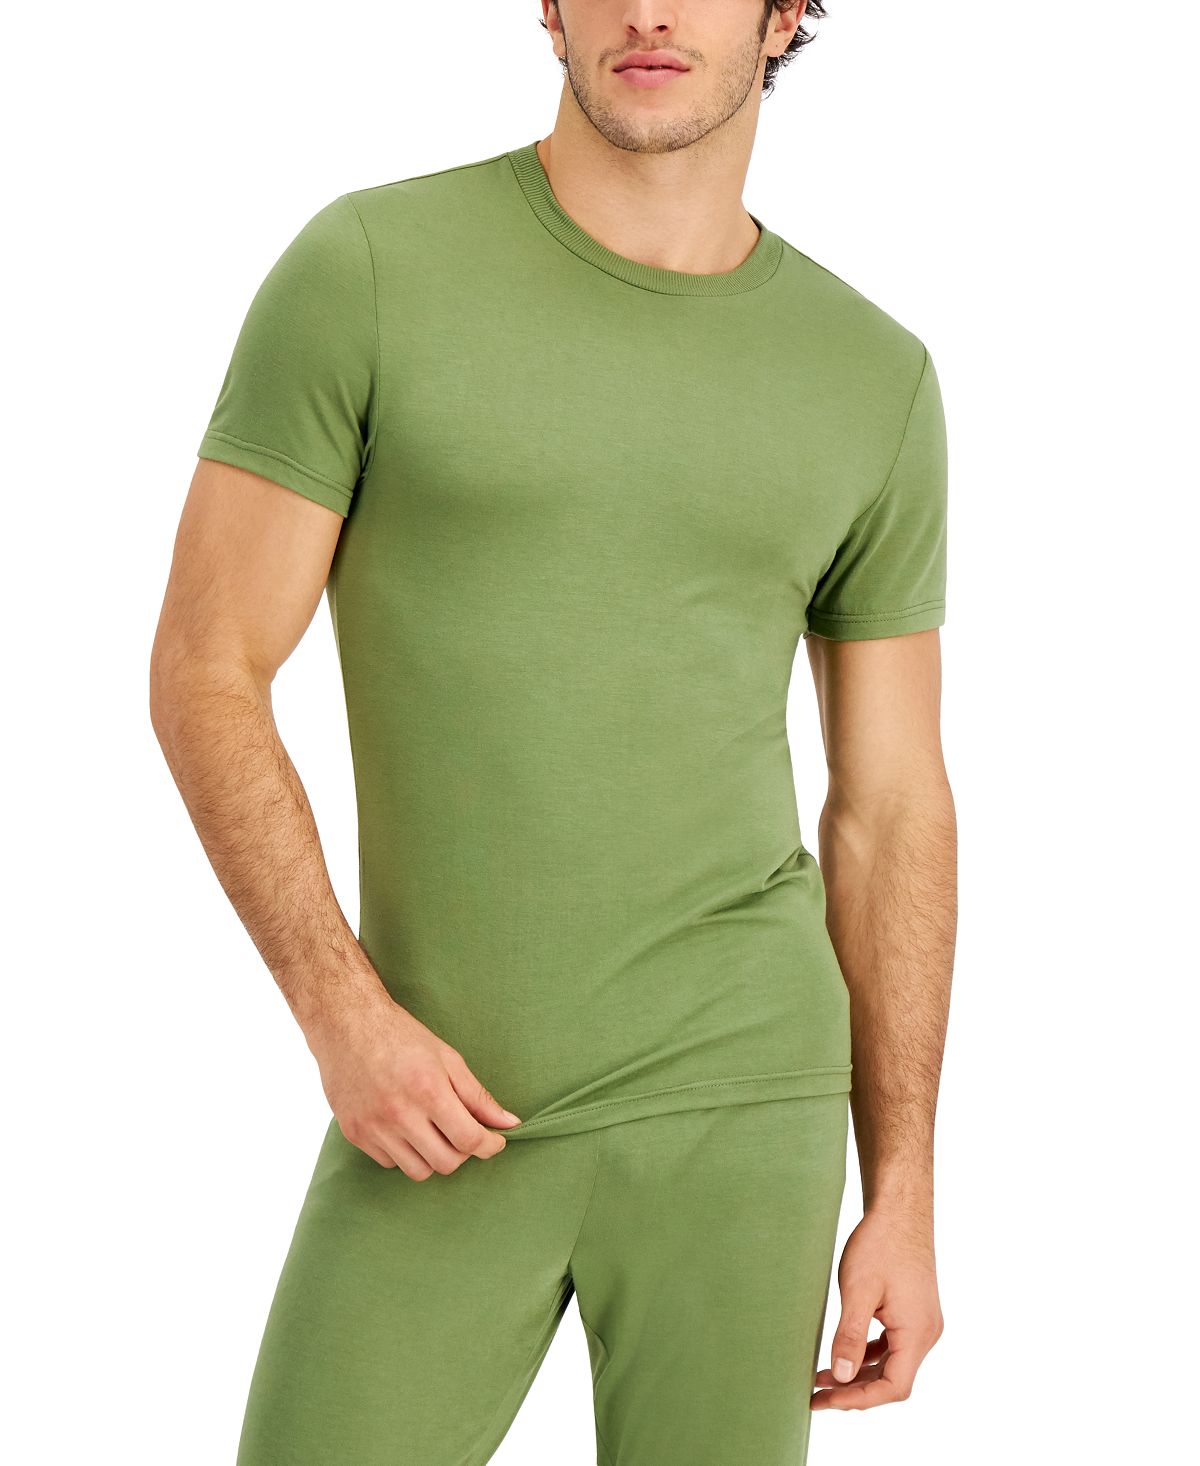 Inc International Concepts Pajama Top Green